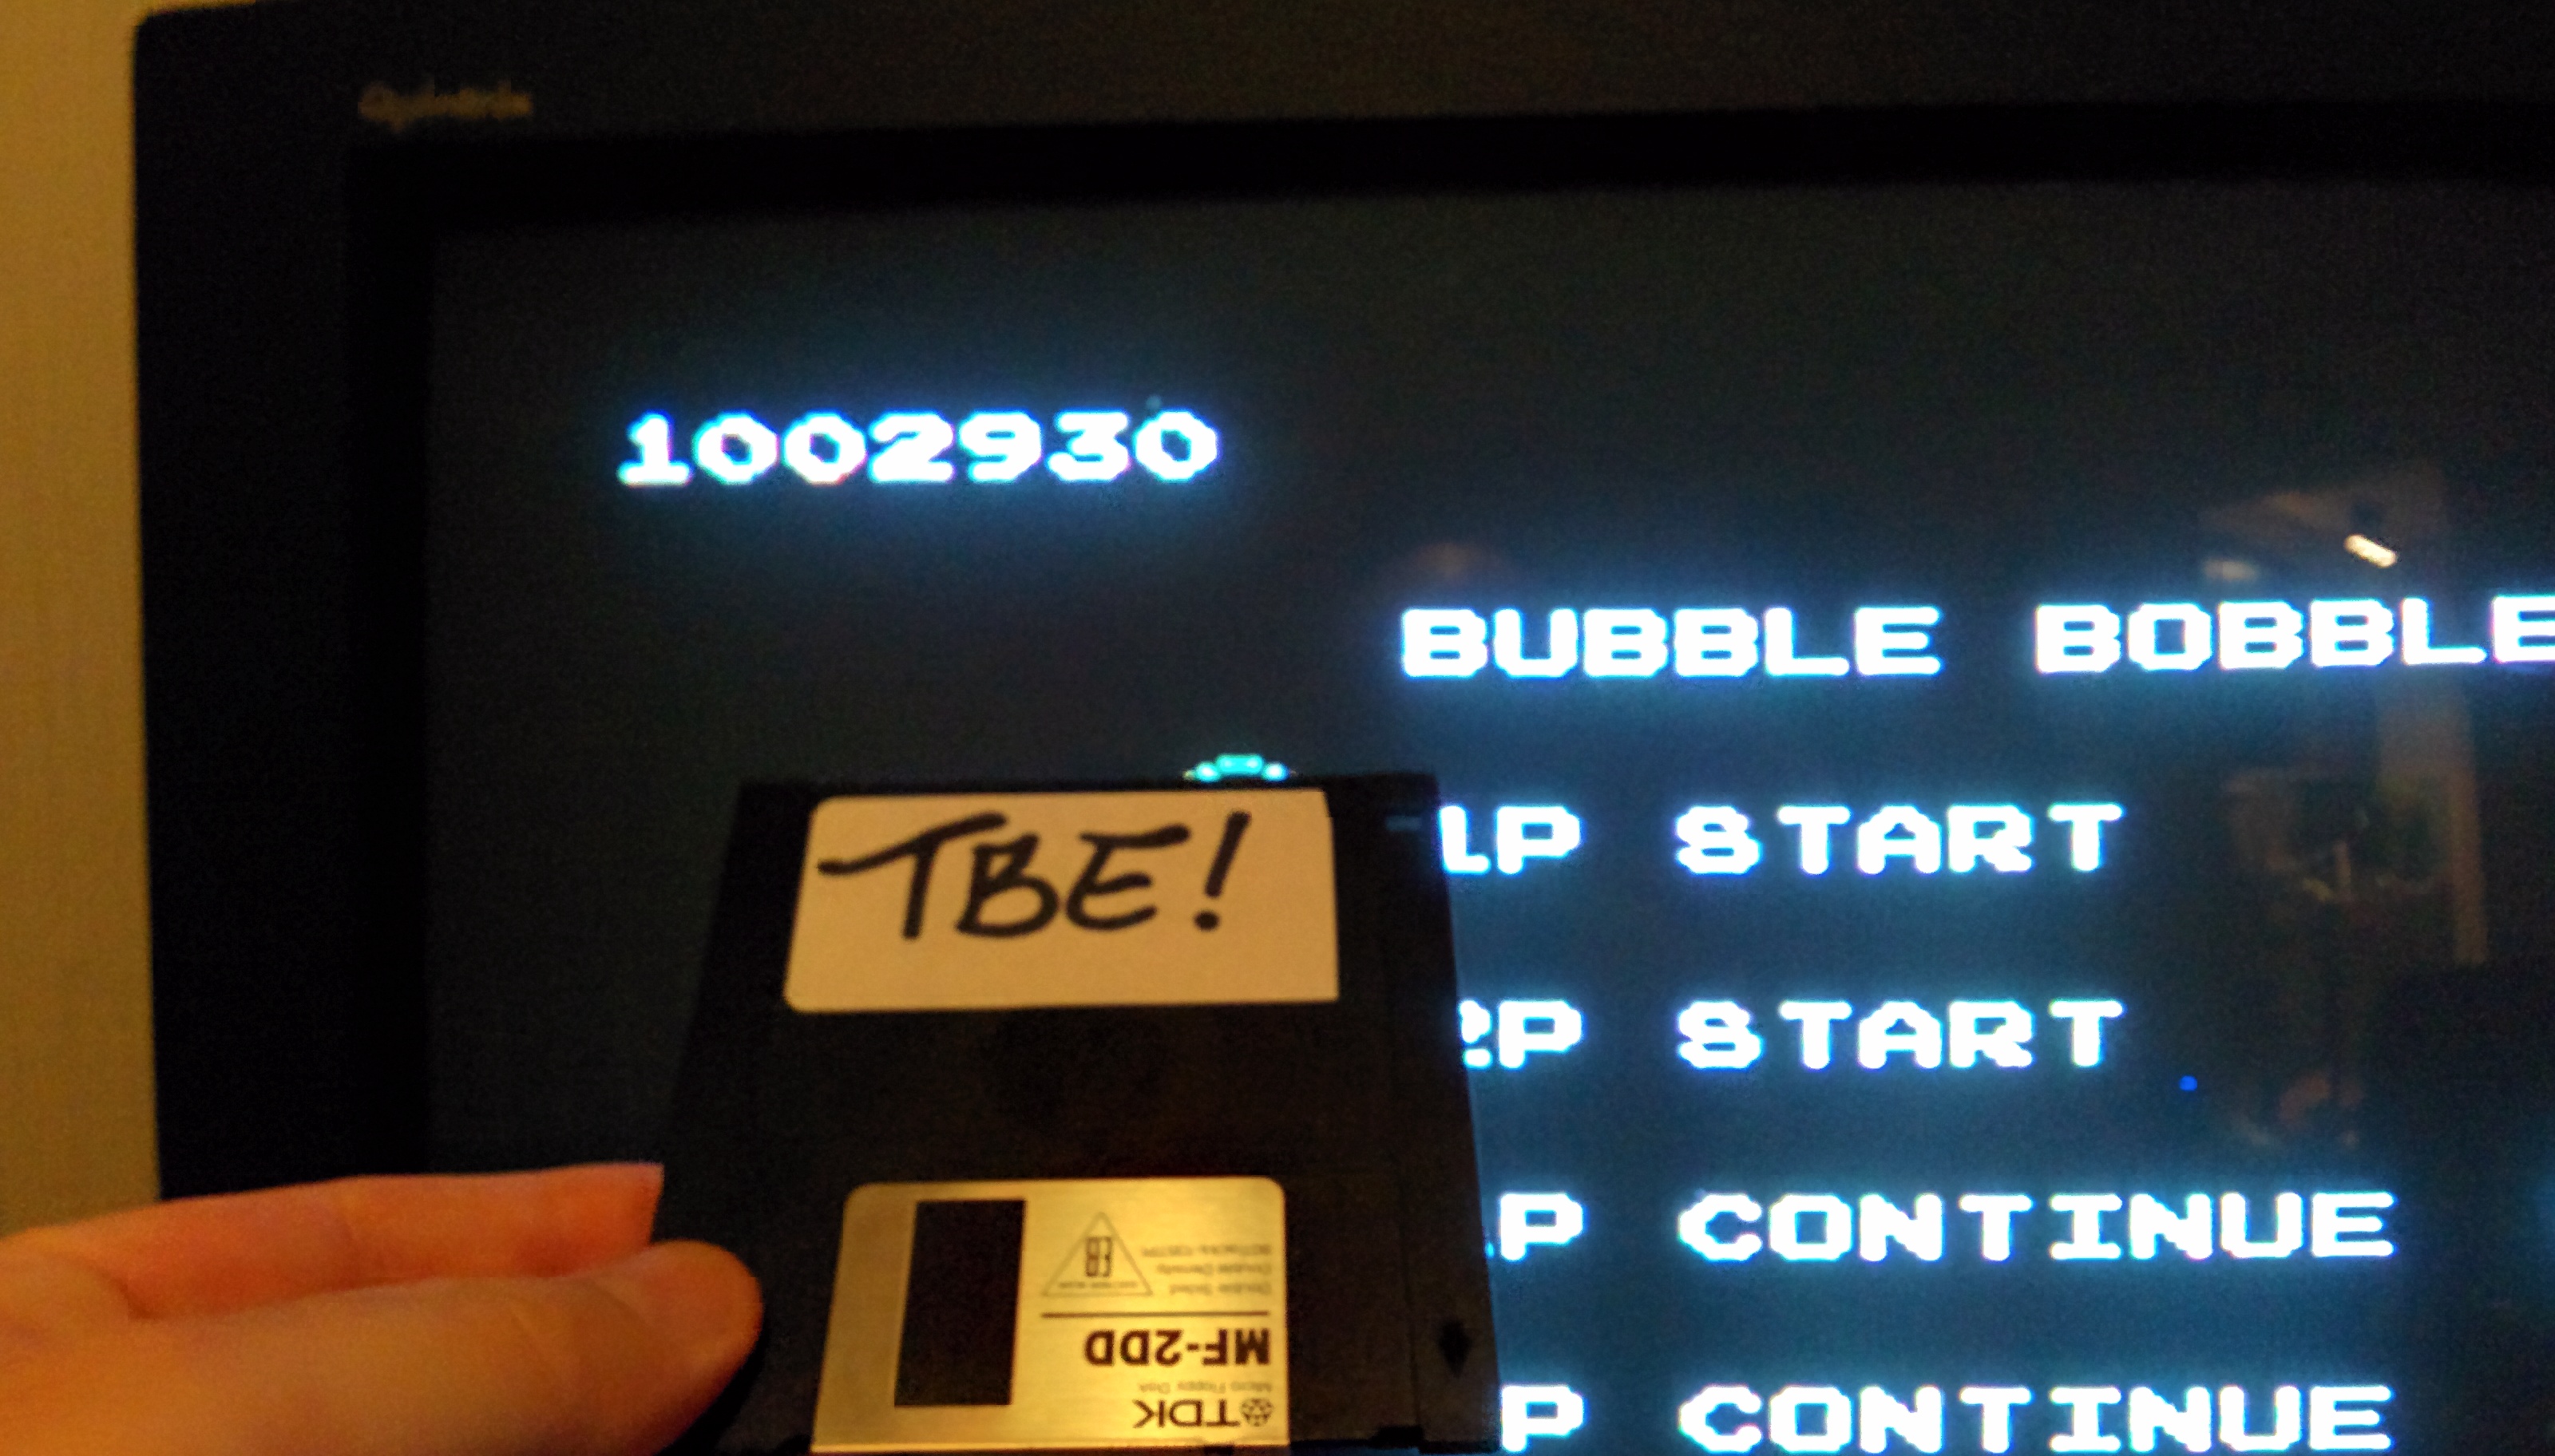 Sixx: Bubble Bobble (Wii Virtual Console: NES) 1,002,930 points on 2014-11-18 16:07:10